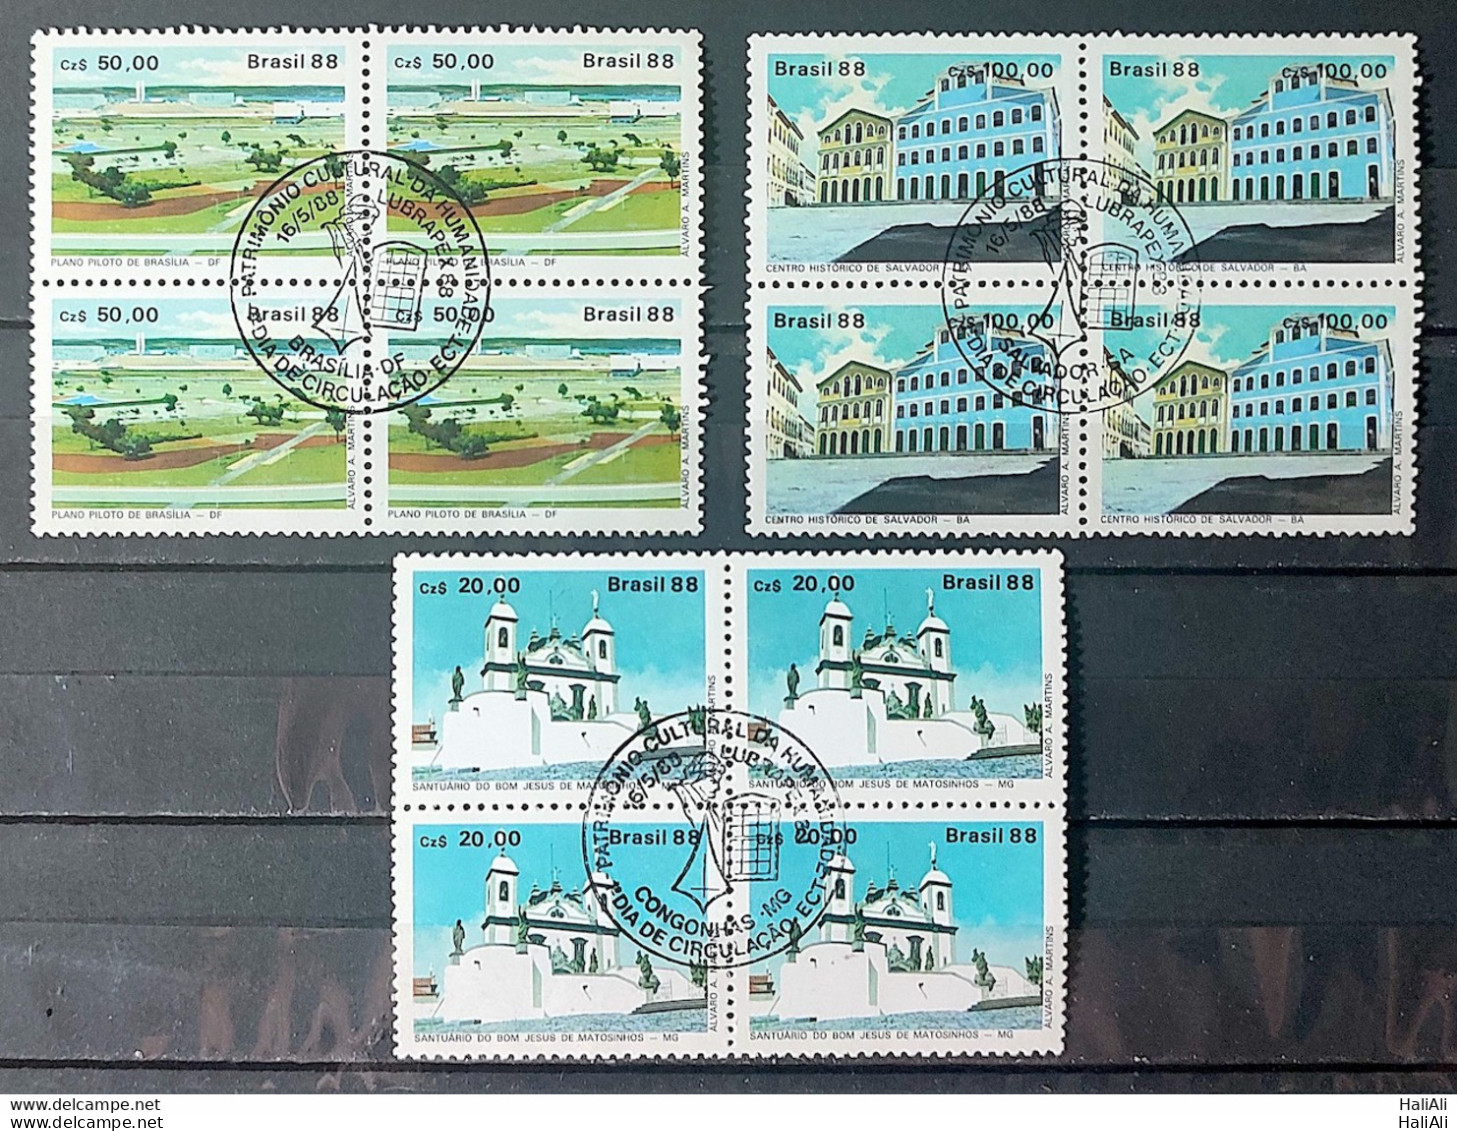 C 1585 Brazil Stamp Lubrapex Portugal Jorge Amado Brasilia 1988 Block Of 4 CBC MG DF BA Full Series - Nuovi